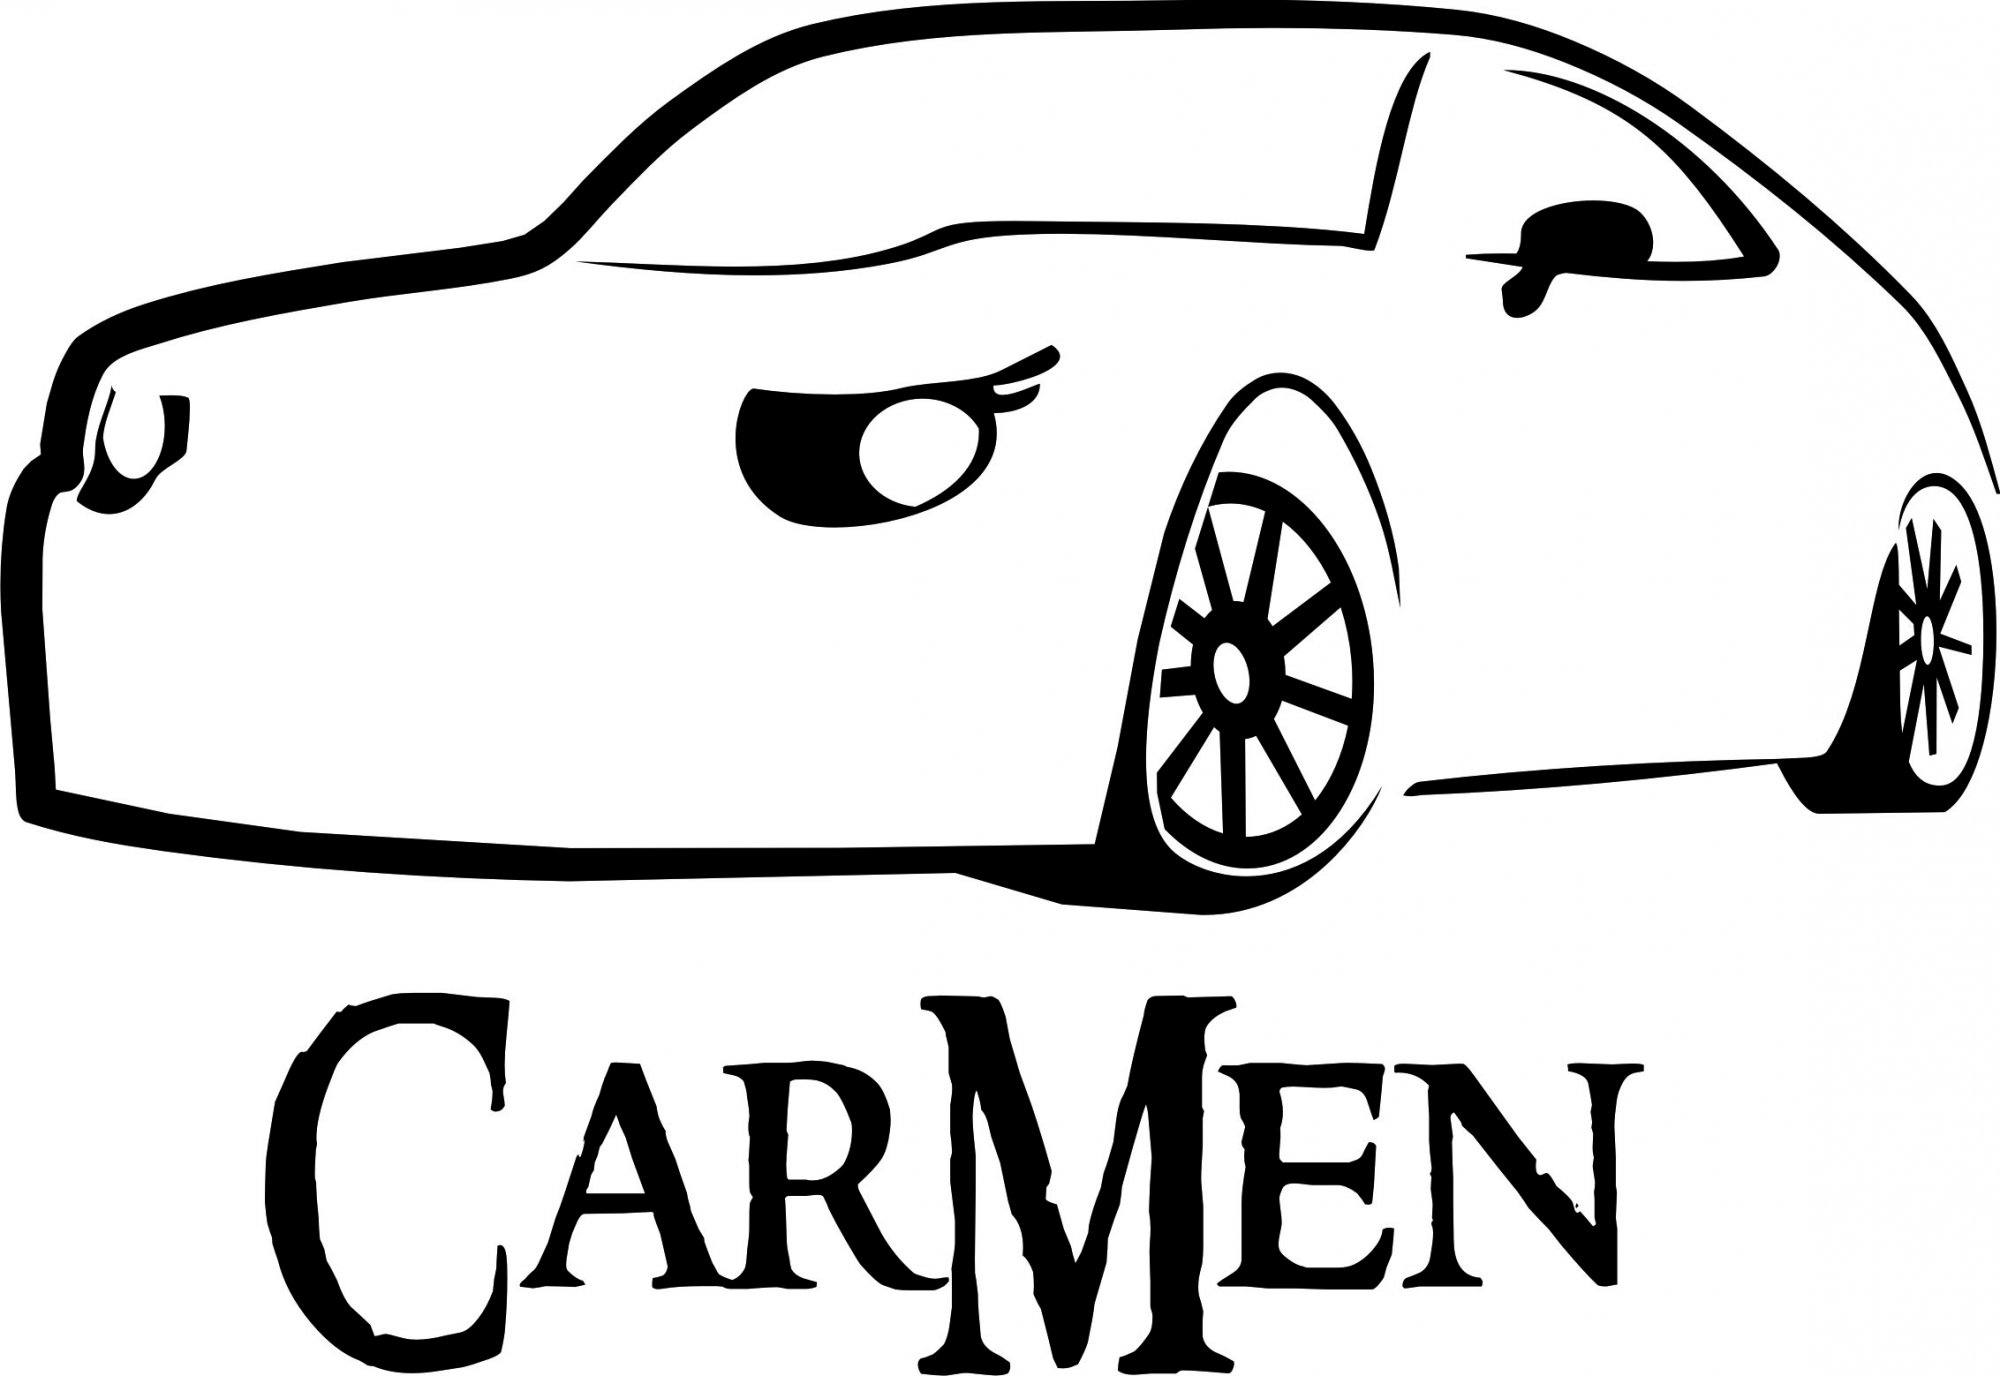 CarMen